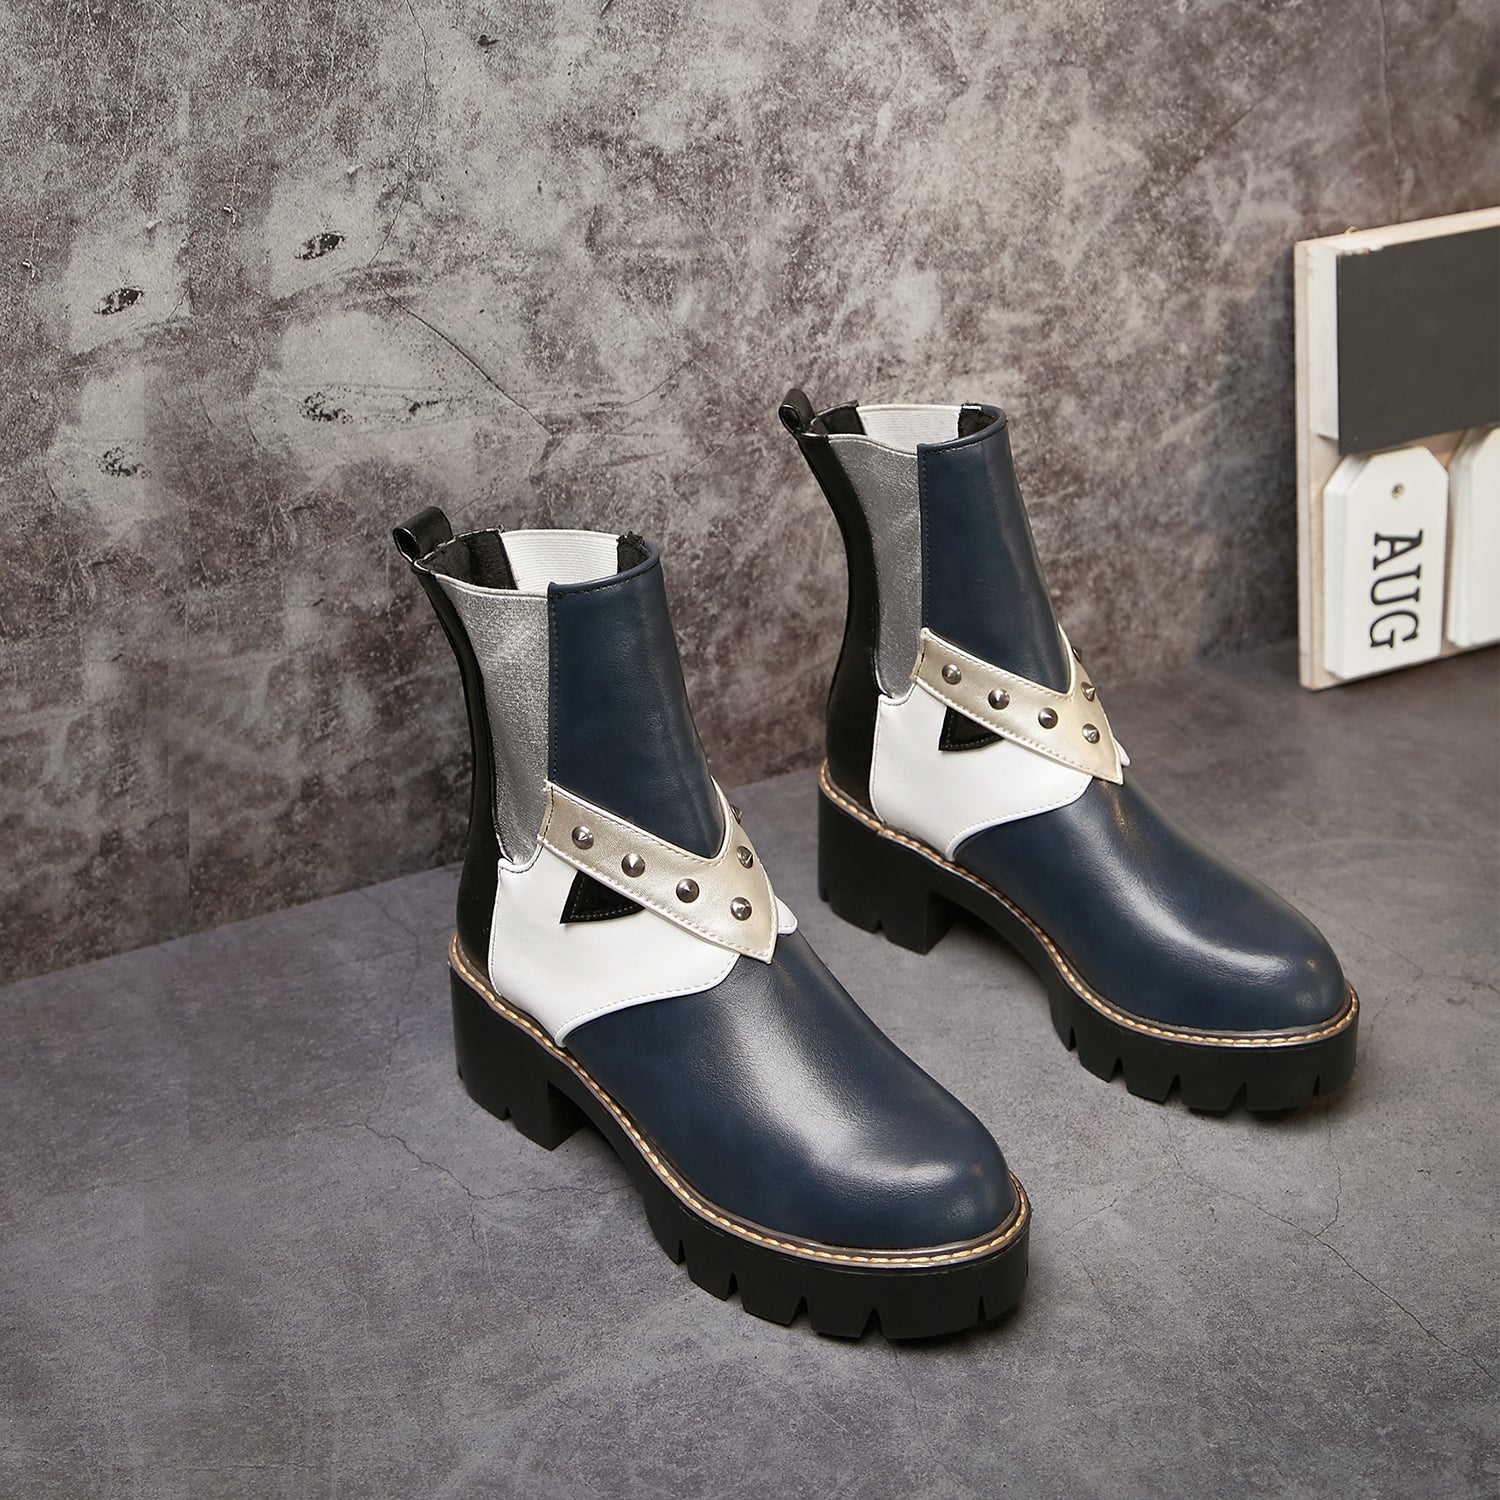 Bigsizeheels Platform round toe punk boot - Blue freeshipping - bigsizeheel®-size5-size15 -All Plus Sizes Available!